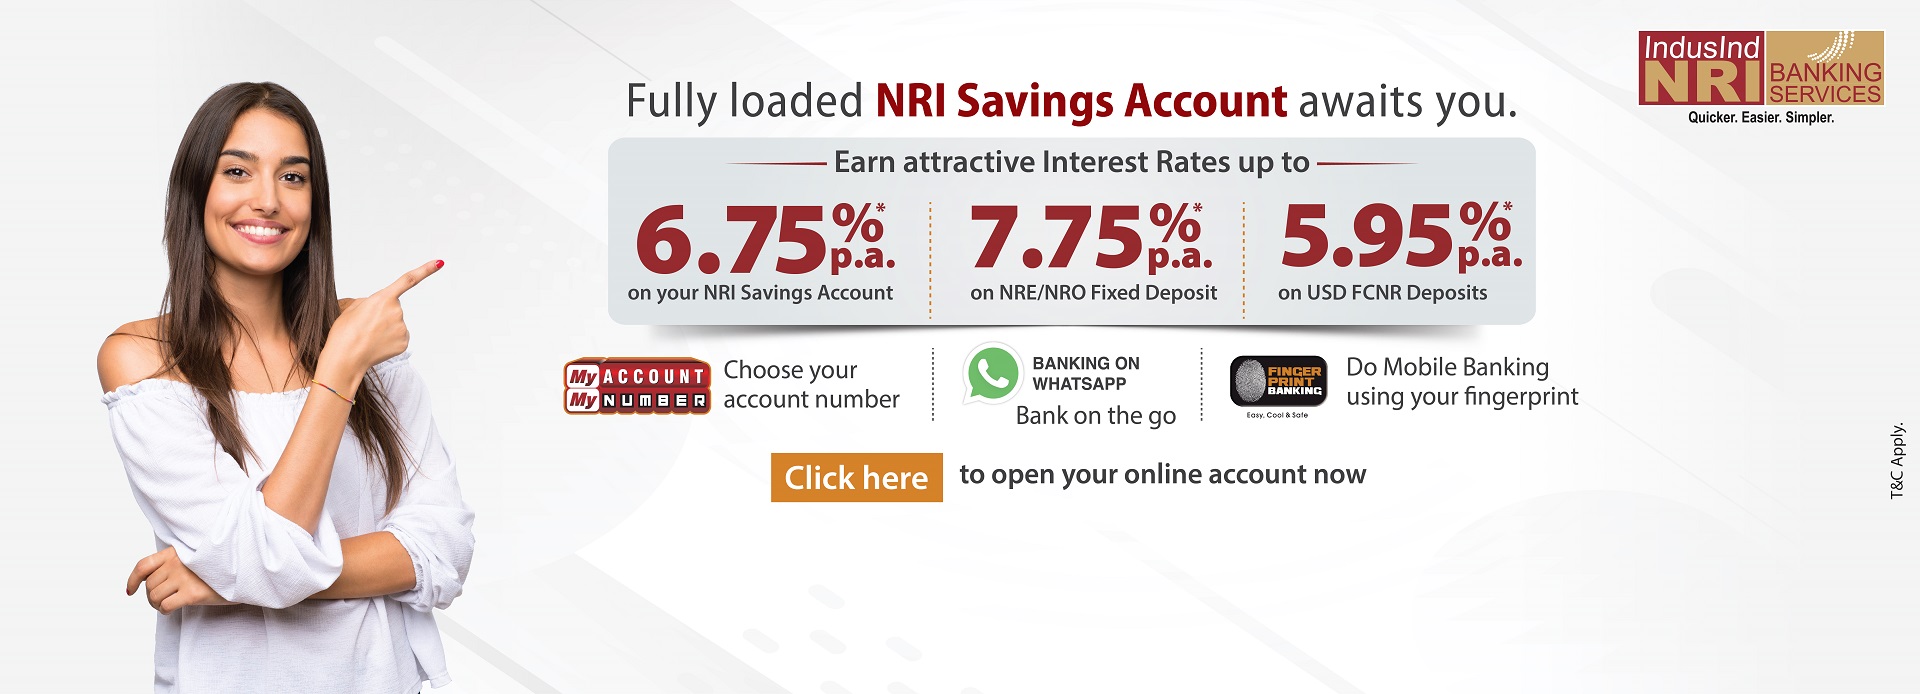 NRI Savings Account Online